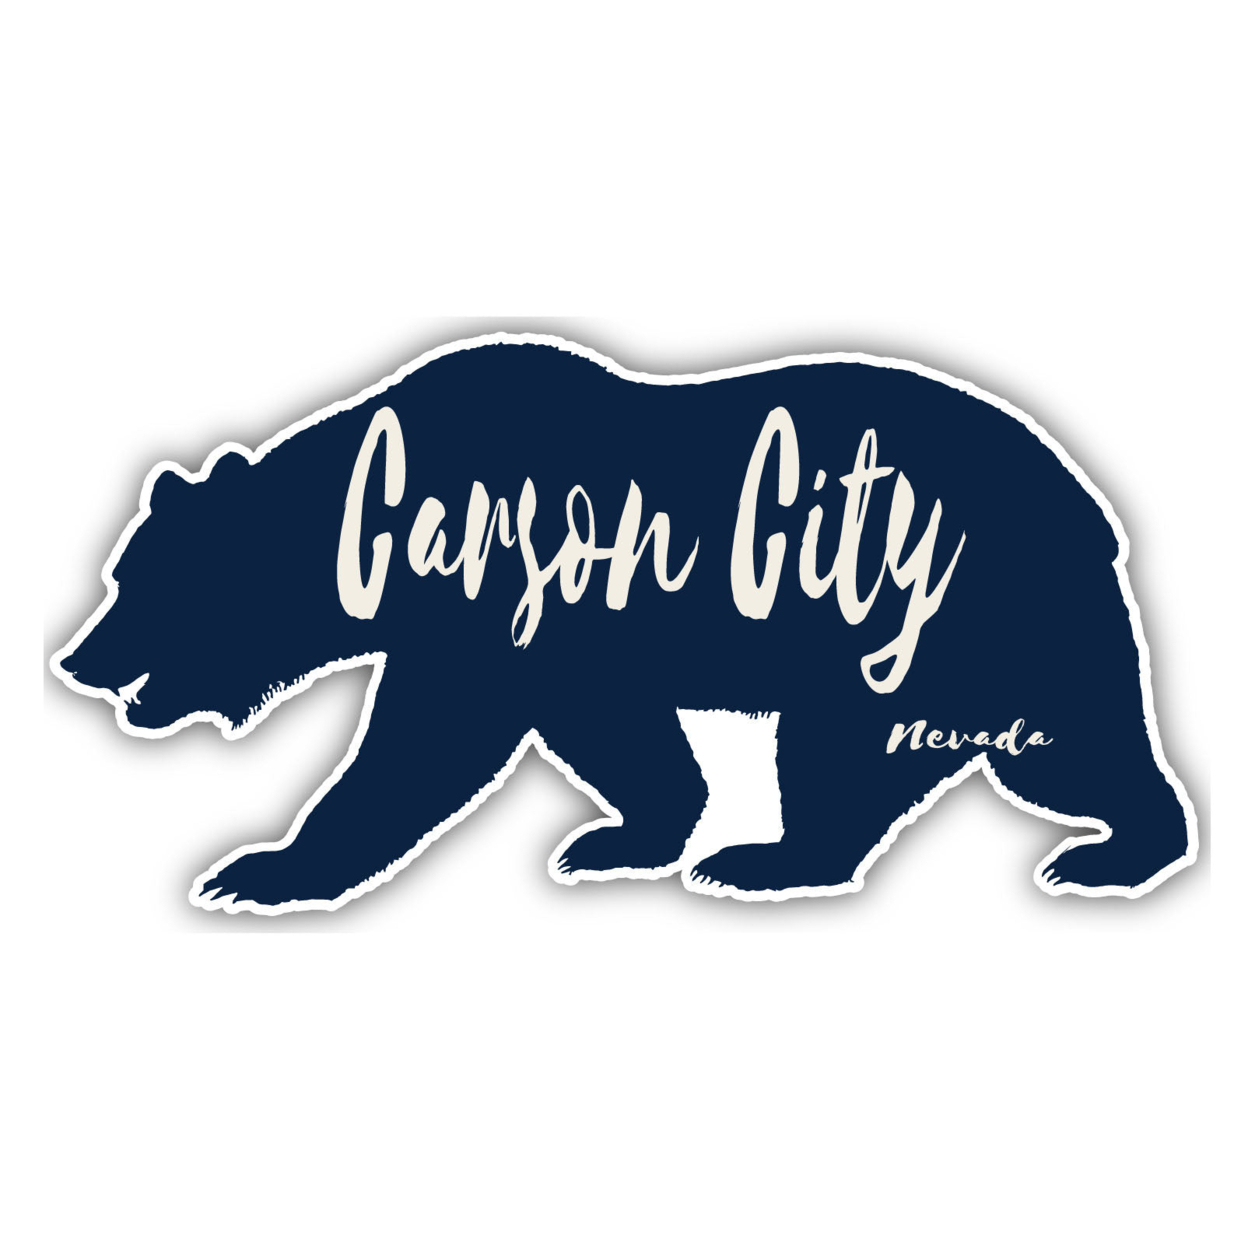 Carson City Nevada Souvenir Decorative Stickers (Choose Theme And Size) - Single Unit, 2-Inch, Bear